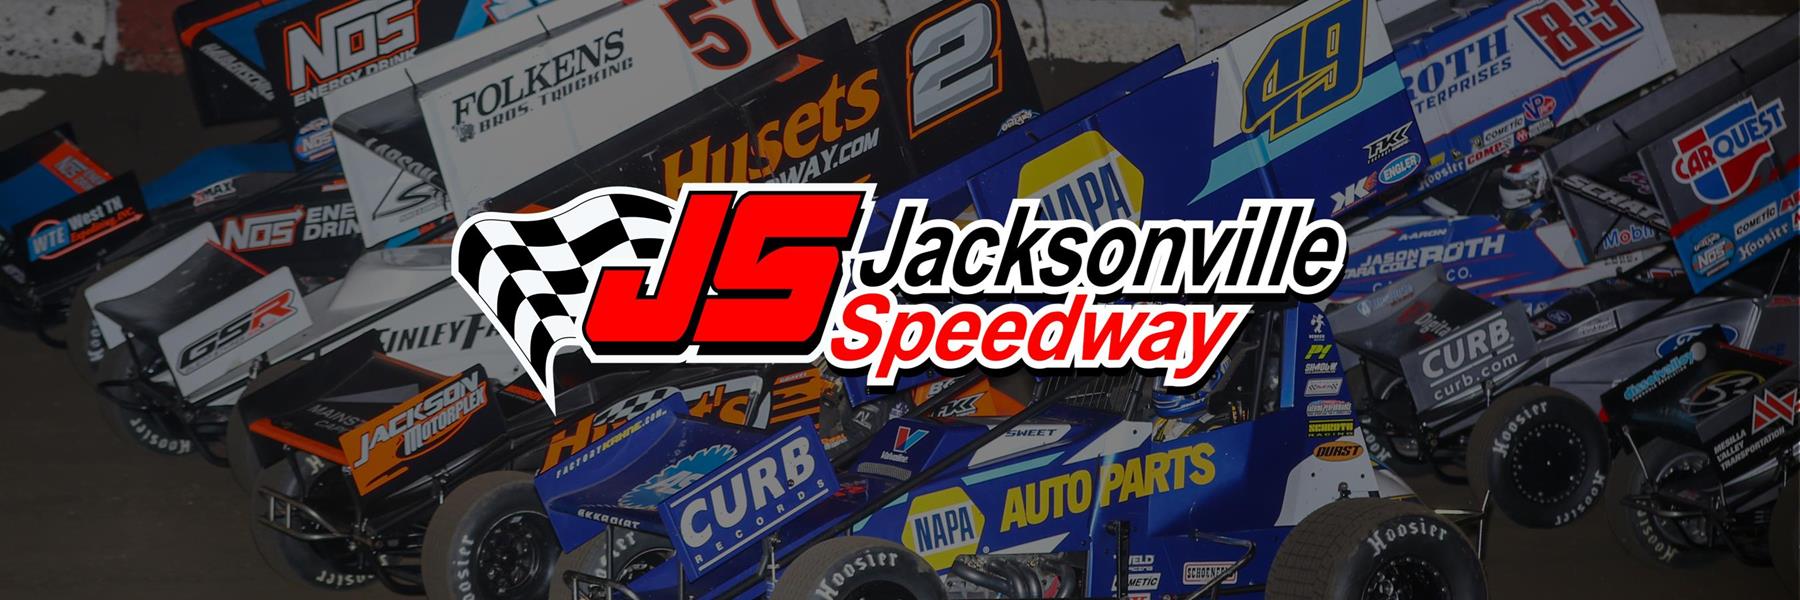 7/29/2022 - Jacksonville Speedway